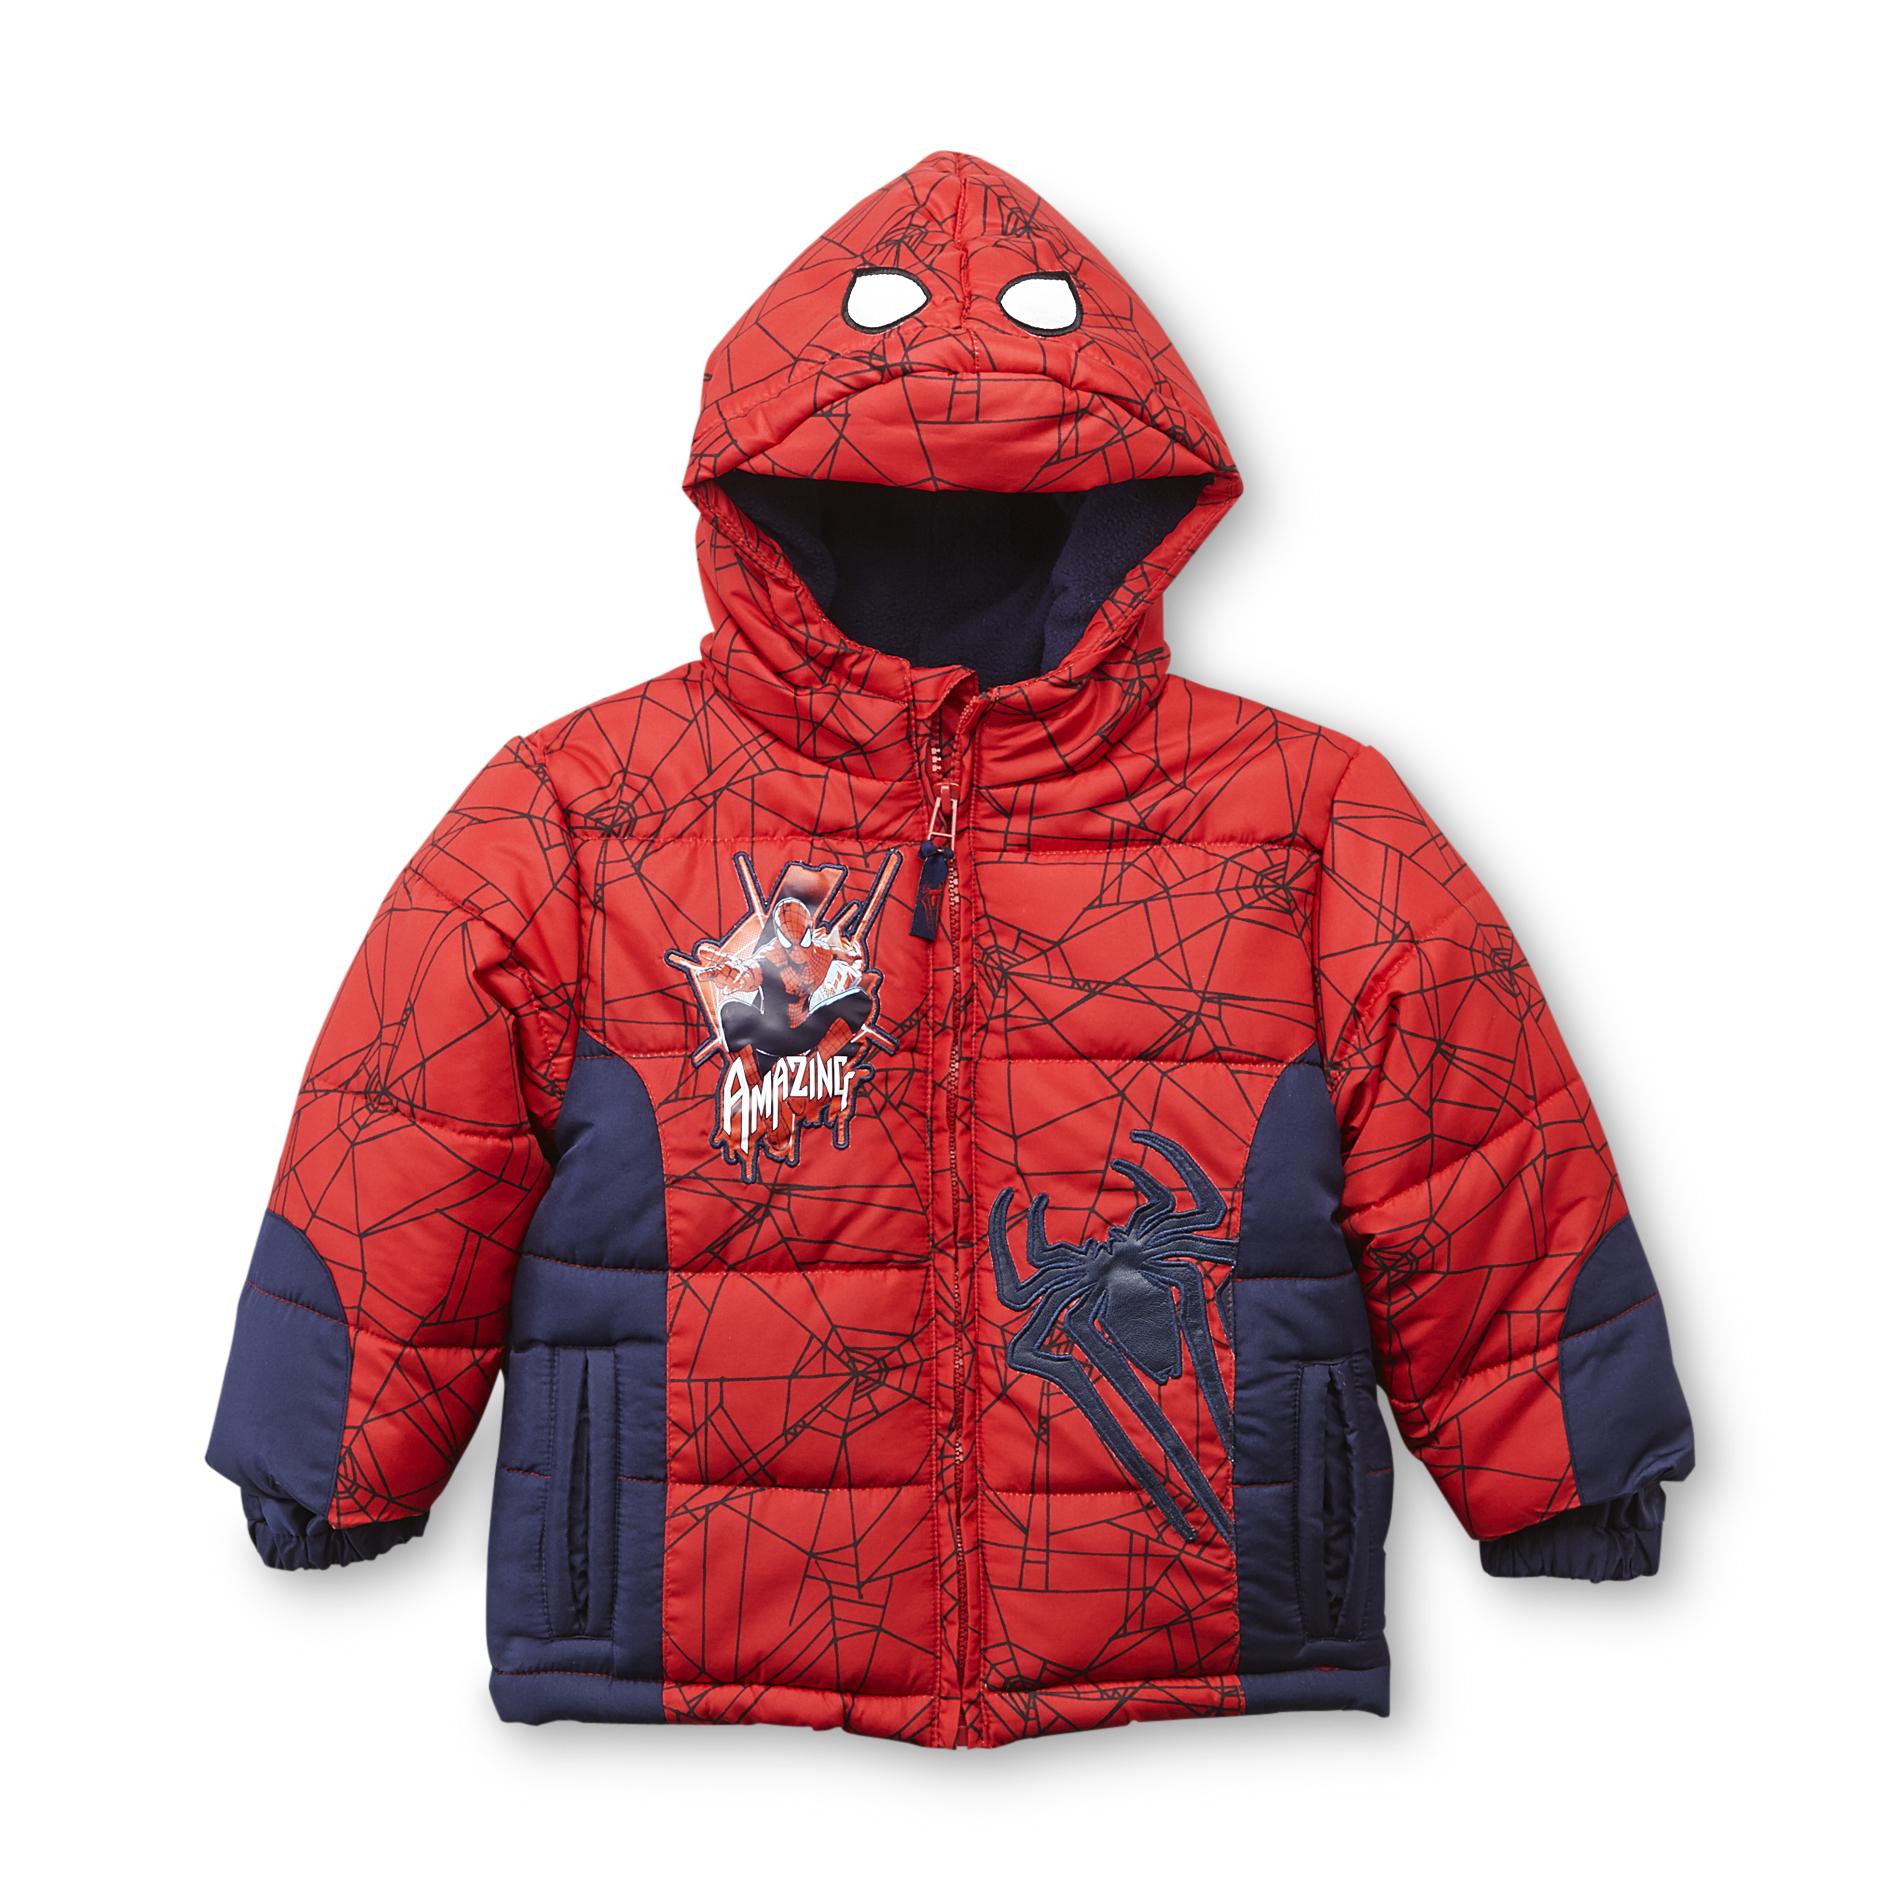 Marvel Spider-Man Toddler Boy's Hooded Puffer Jacket